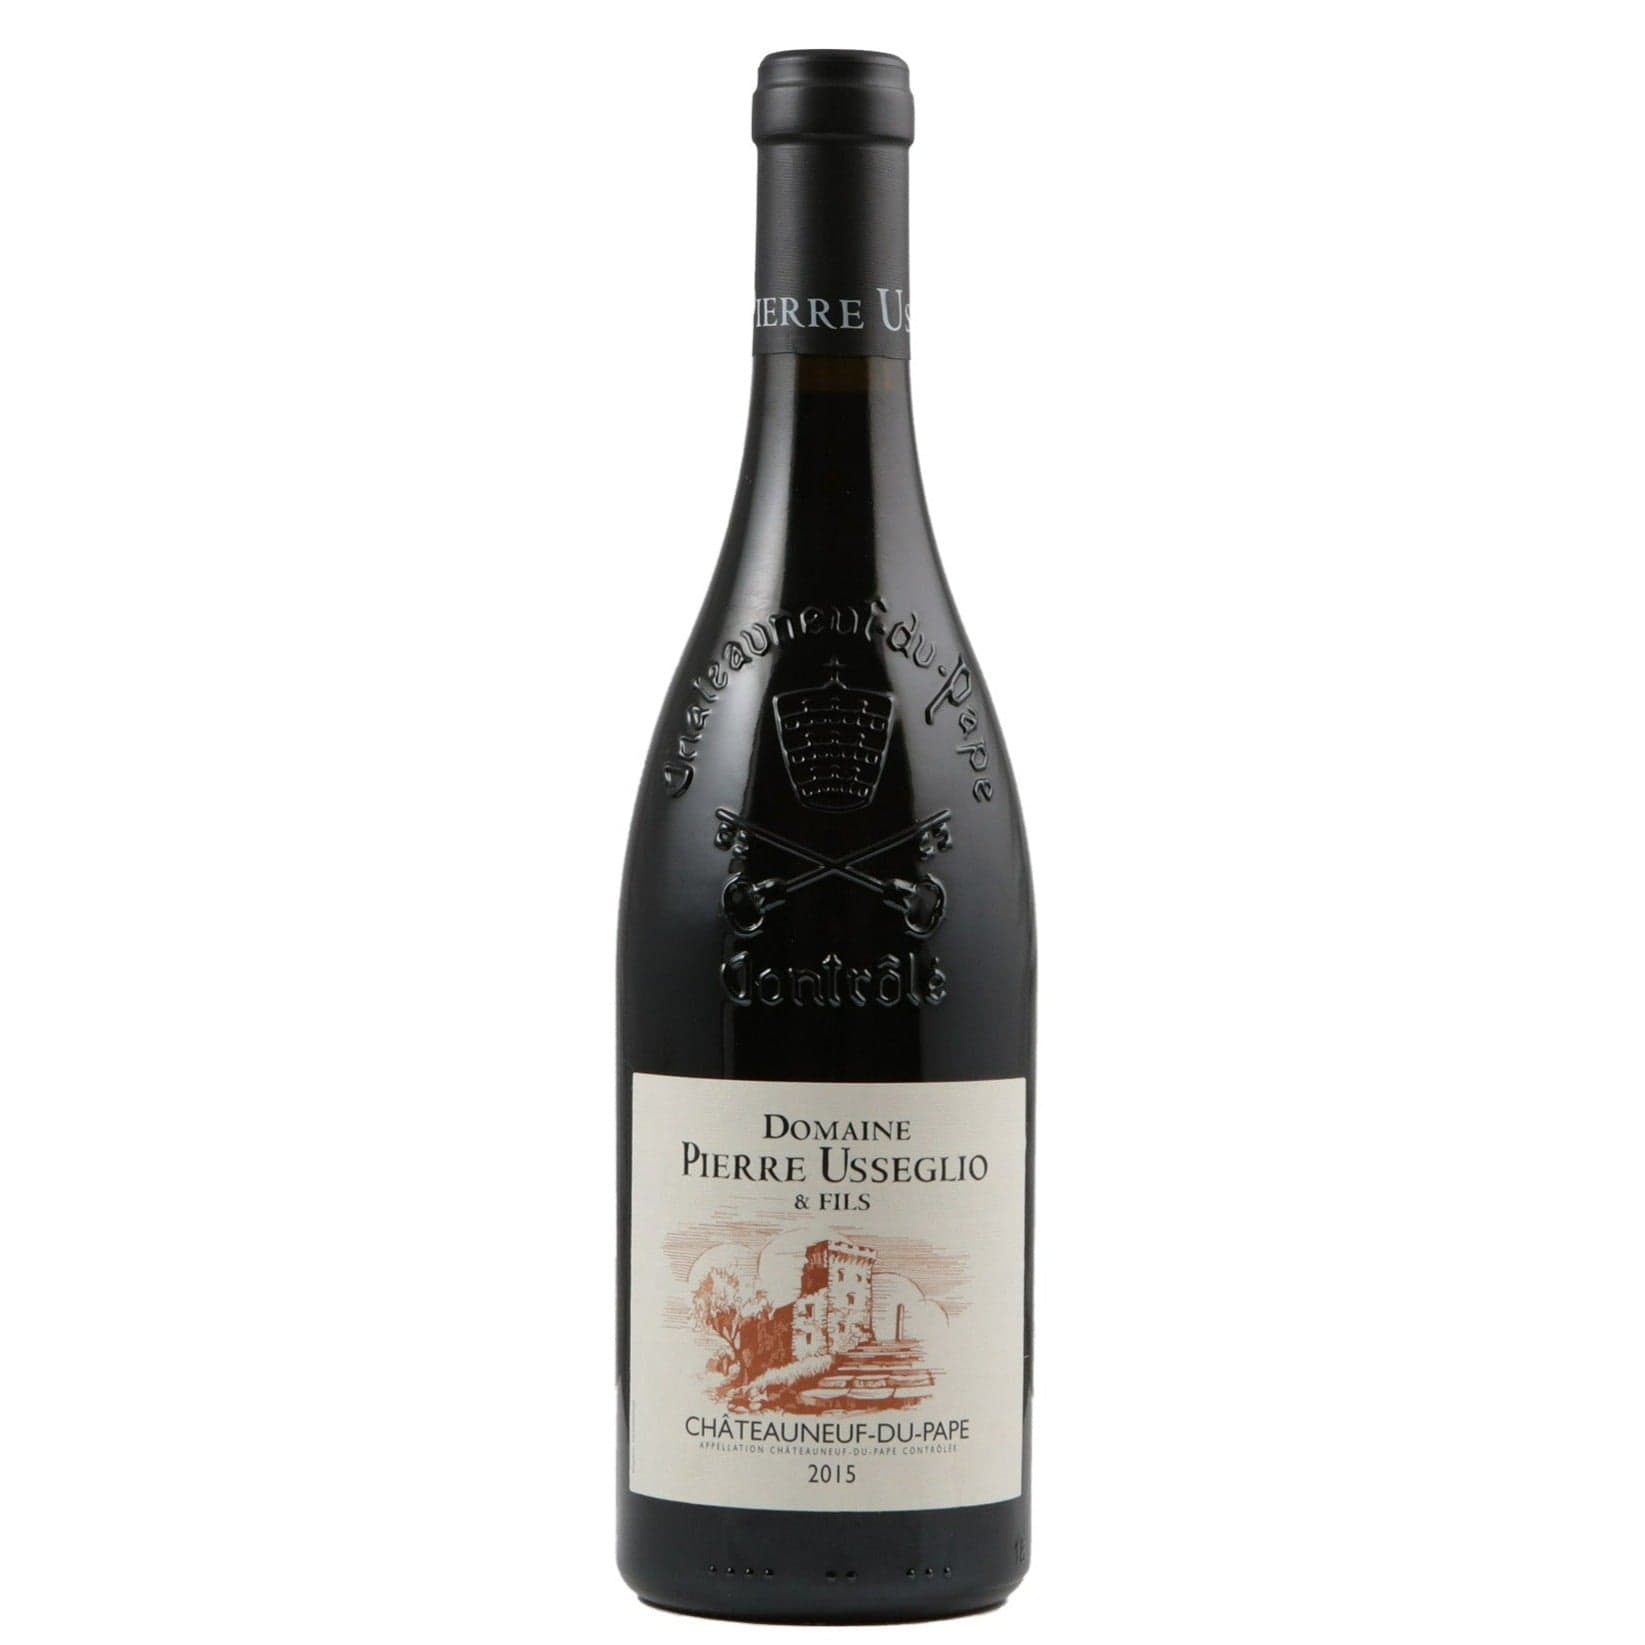 Single bottle of Red wine Dom. Pierre Usseglio et Fils, Chateauneuf du Pape, 2015 Grenache, Syrah, Cinsault & Mourvedre